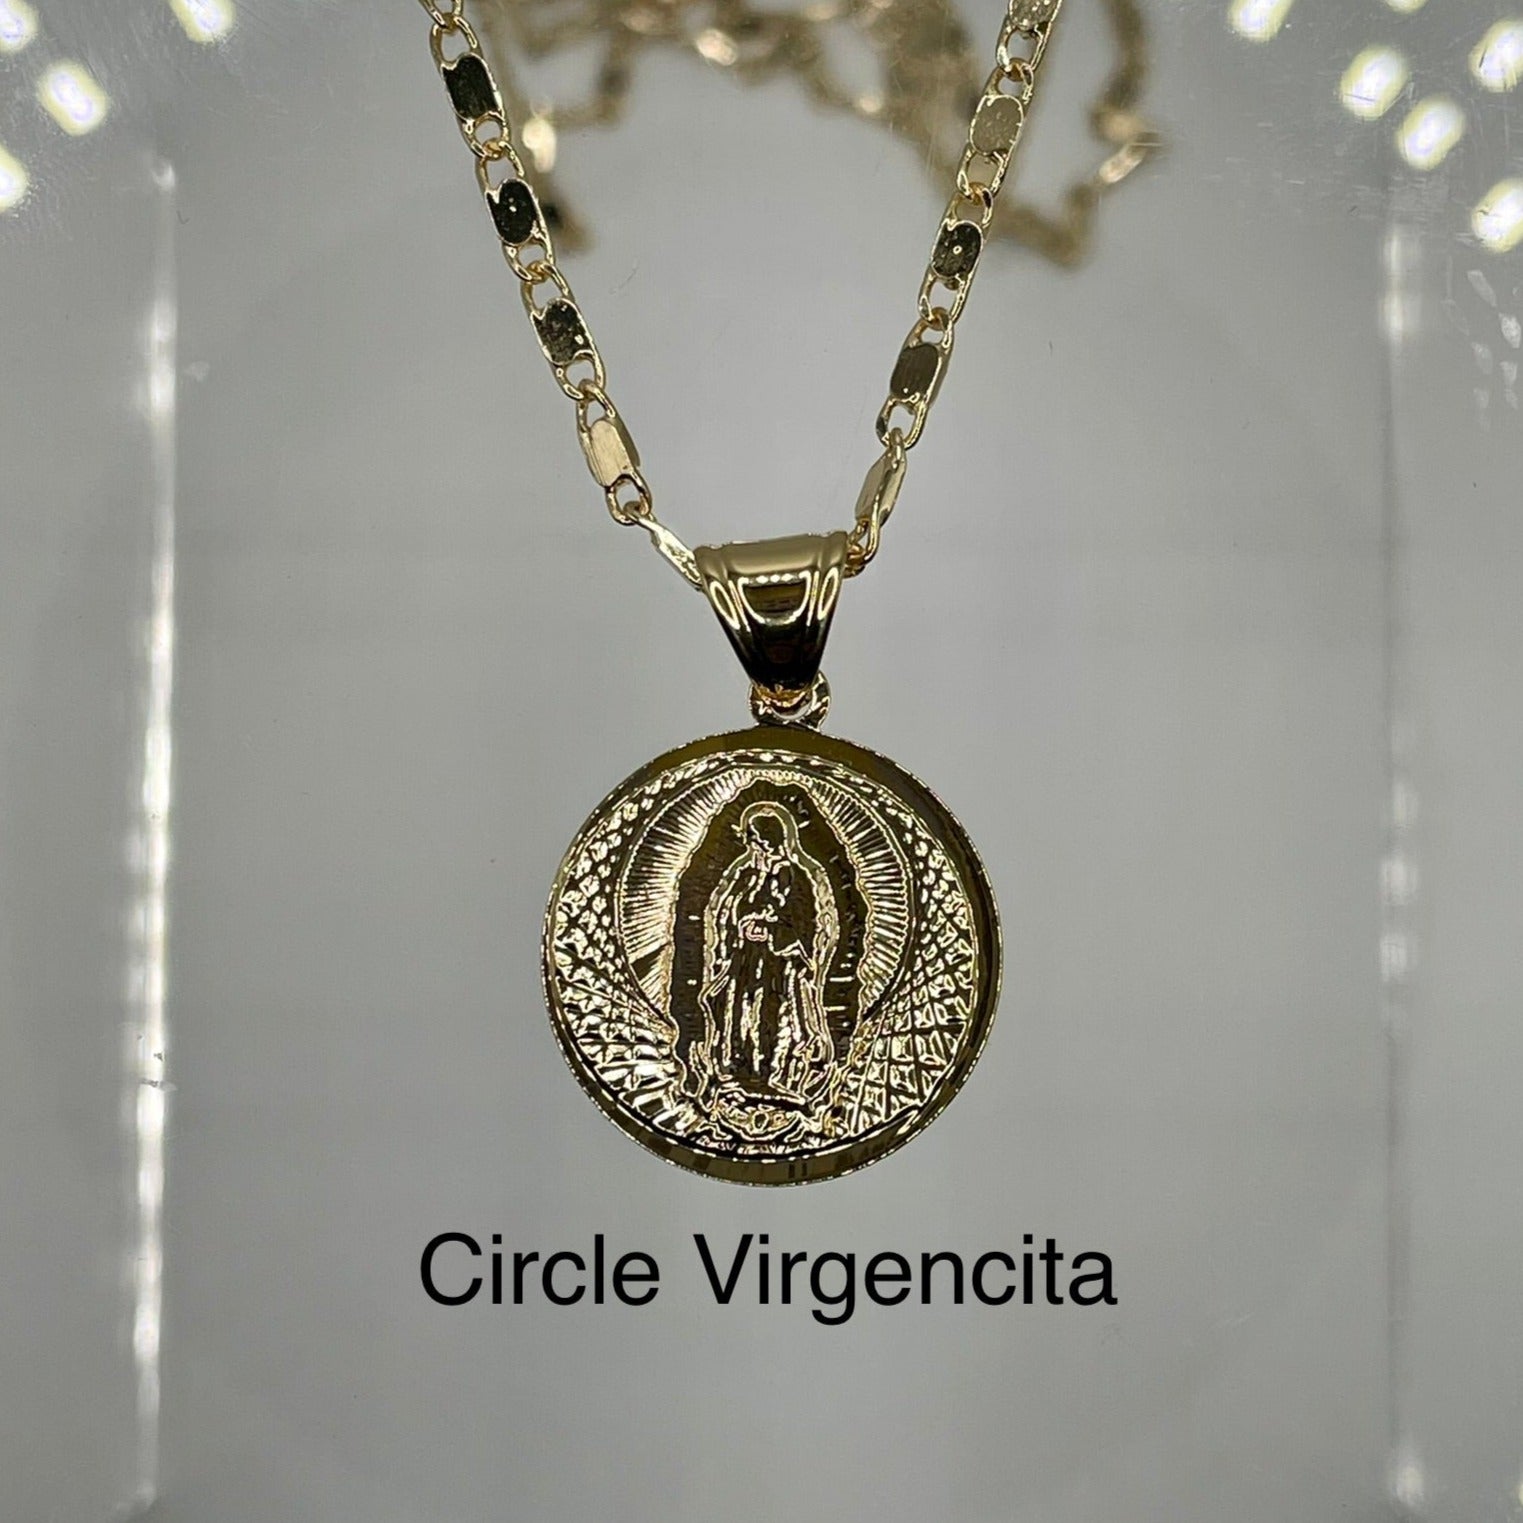 Virgen mary jewelry. Virgen maria jewelry. Joyas virgencita. Virgencita. Virgencita pendant.